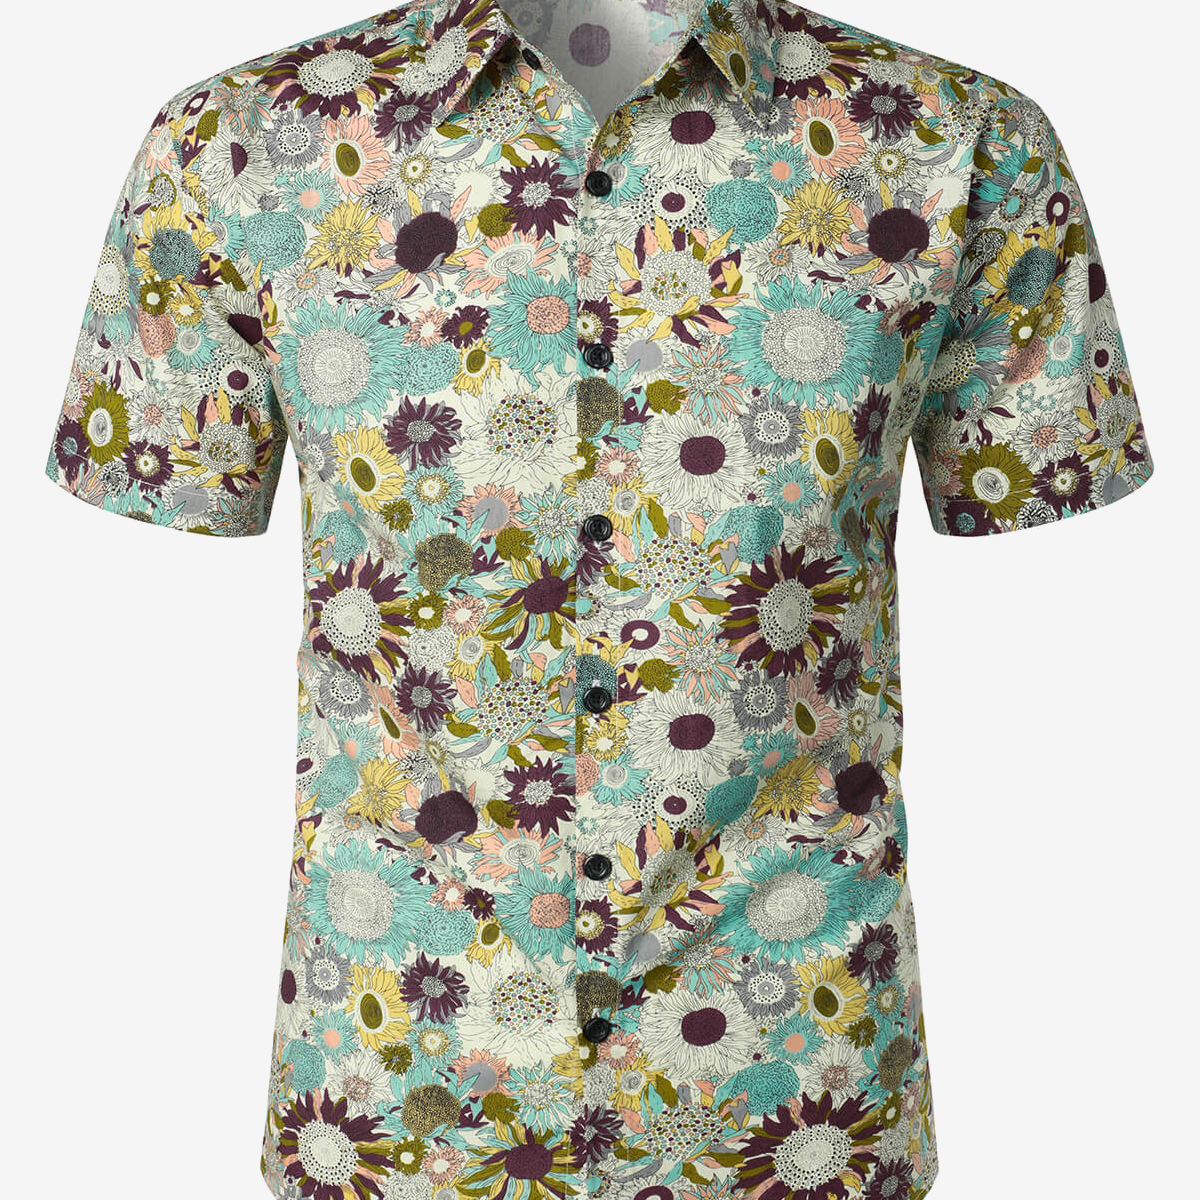 Men's Vintage Floral Summer Cotton Button Up Breathable Short Sleeve Hawaiian Shirt